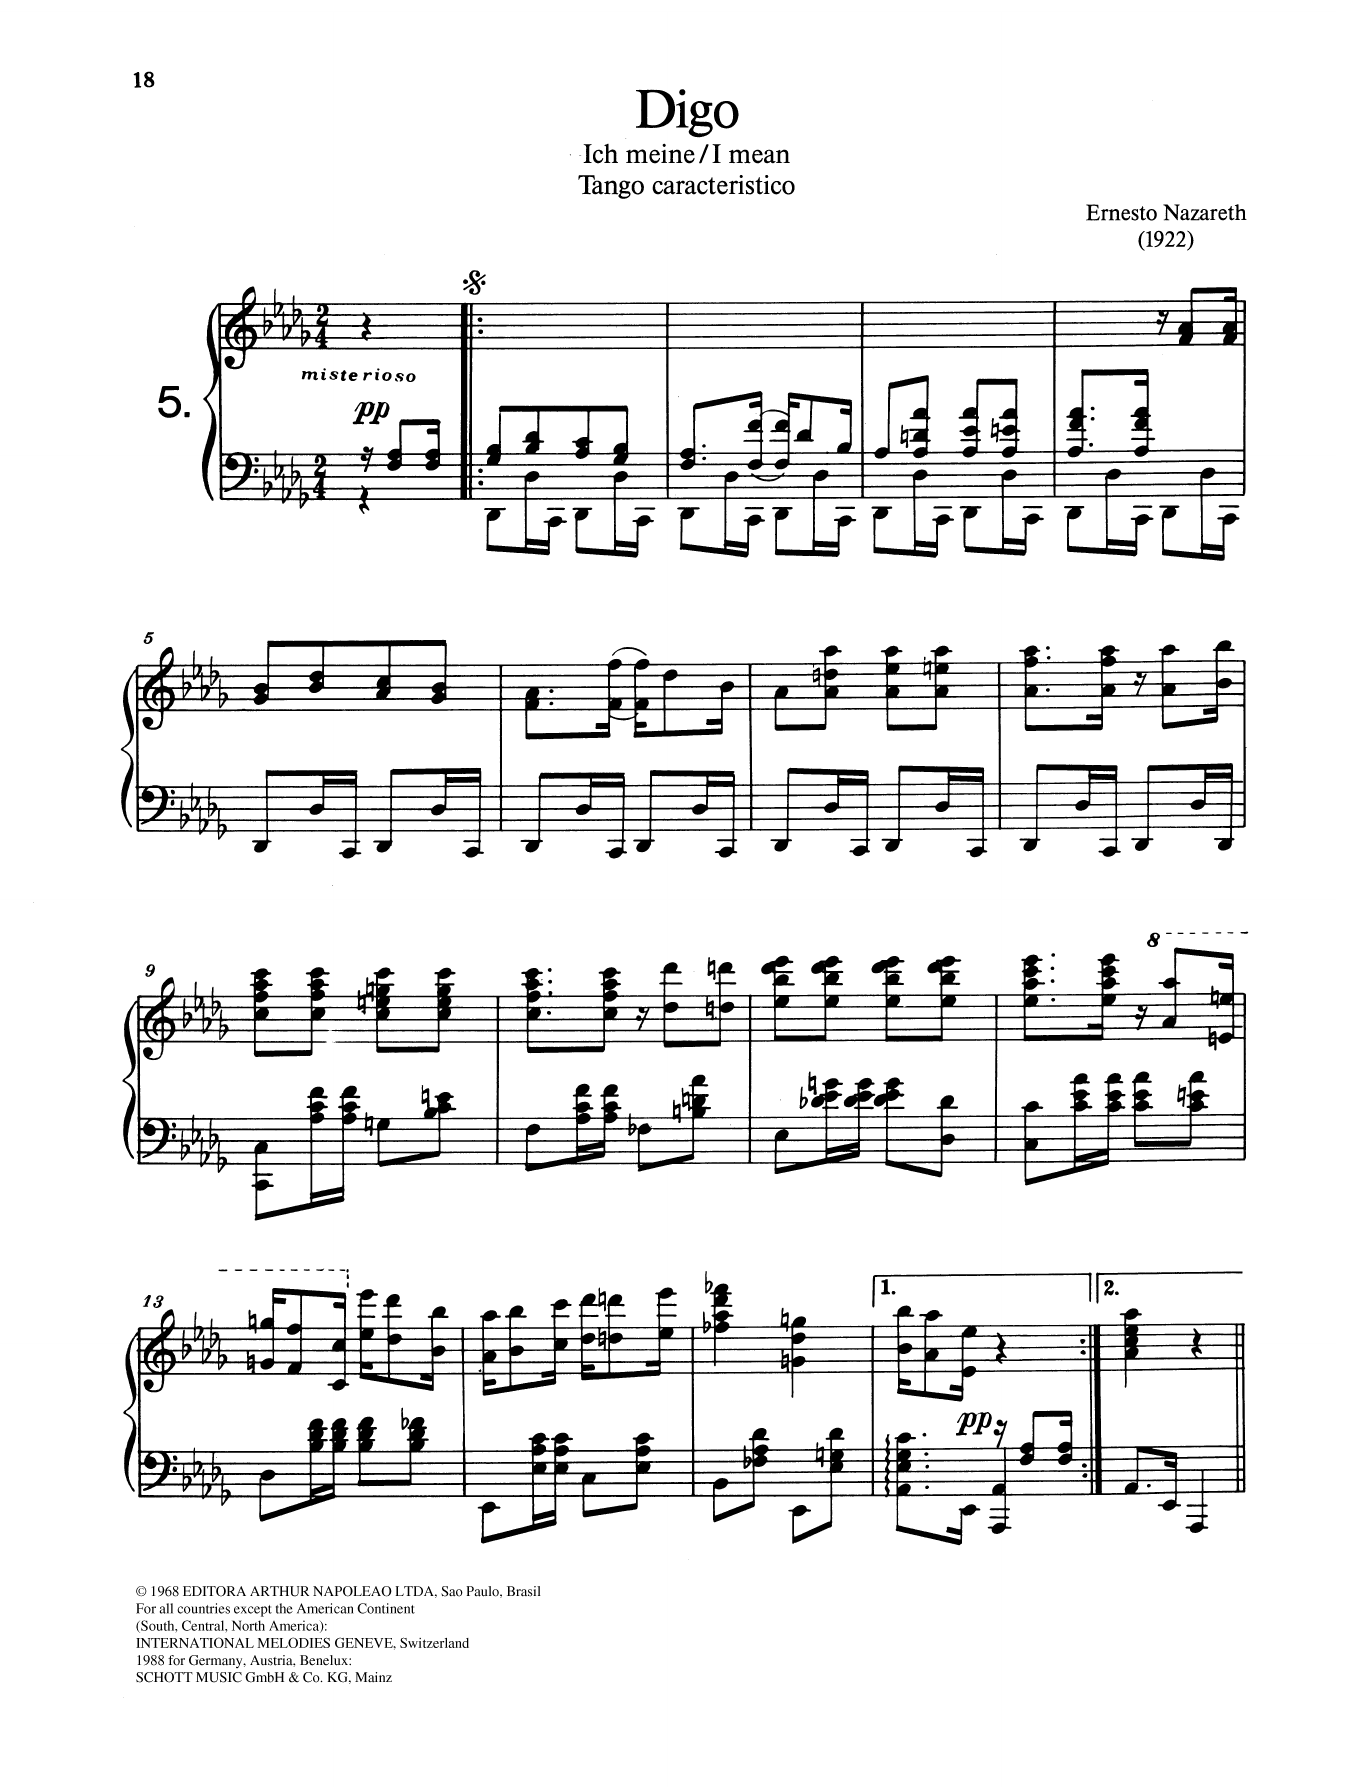 Ernesto Nazareth Digo Sheet Music Notes & Chords for Piano Solo - Download or Print PDF